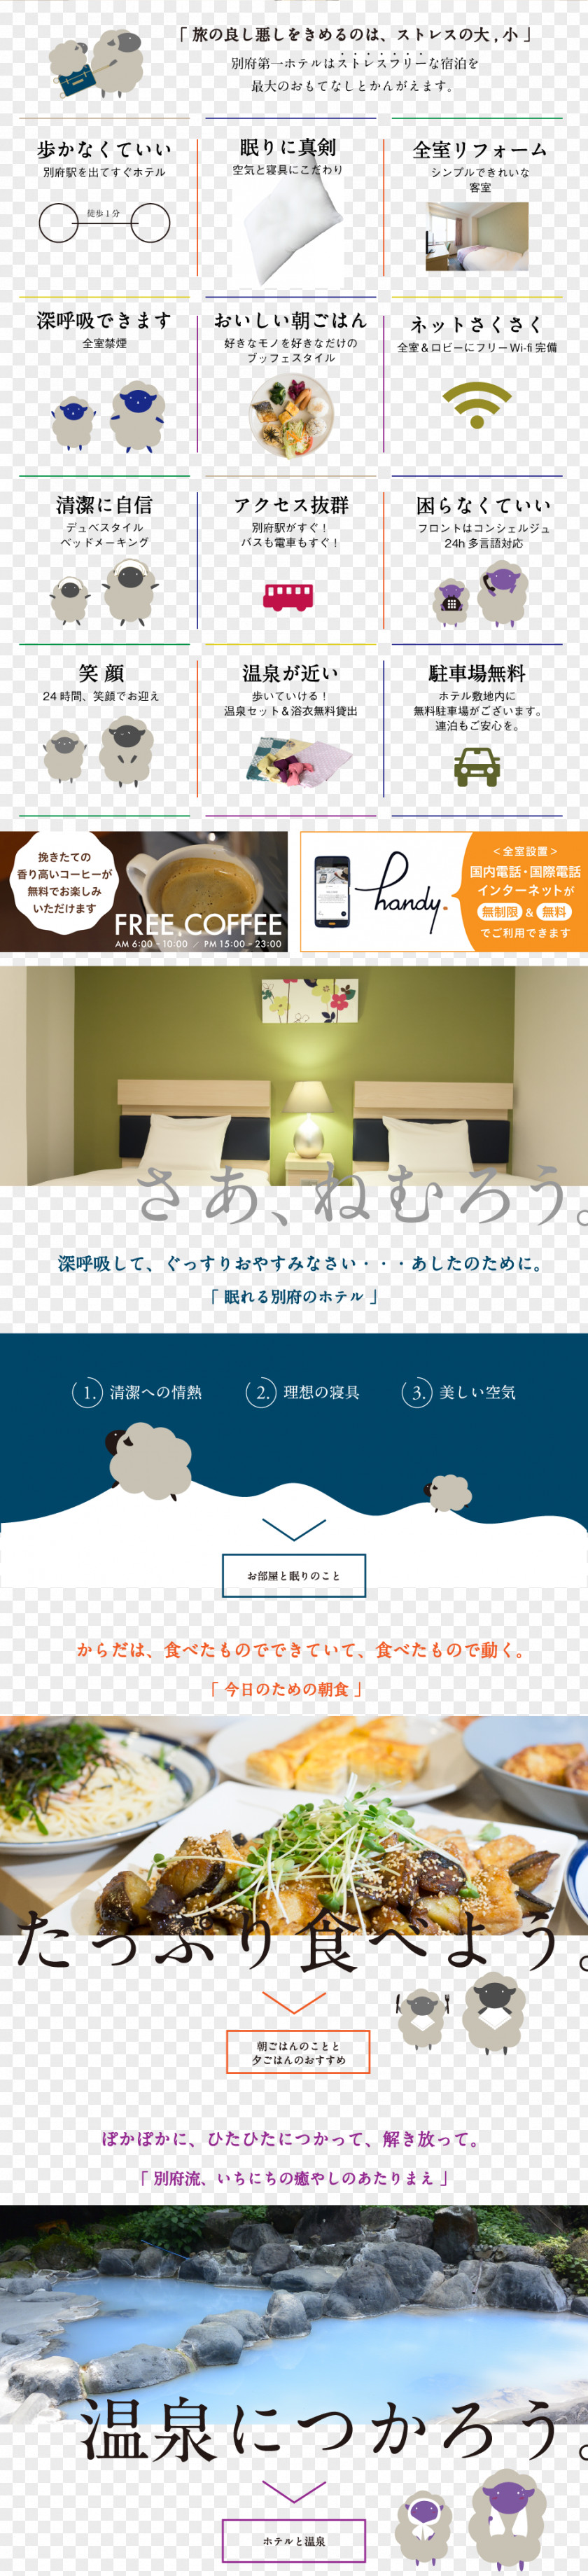 Hotel Beppu Daiichi Rakuten Travel Accommodation PNG